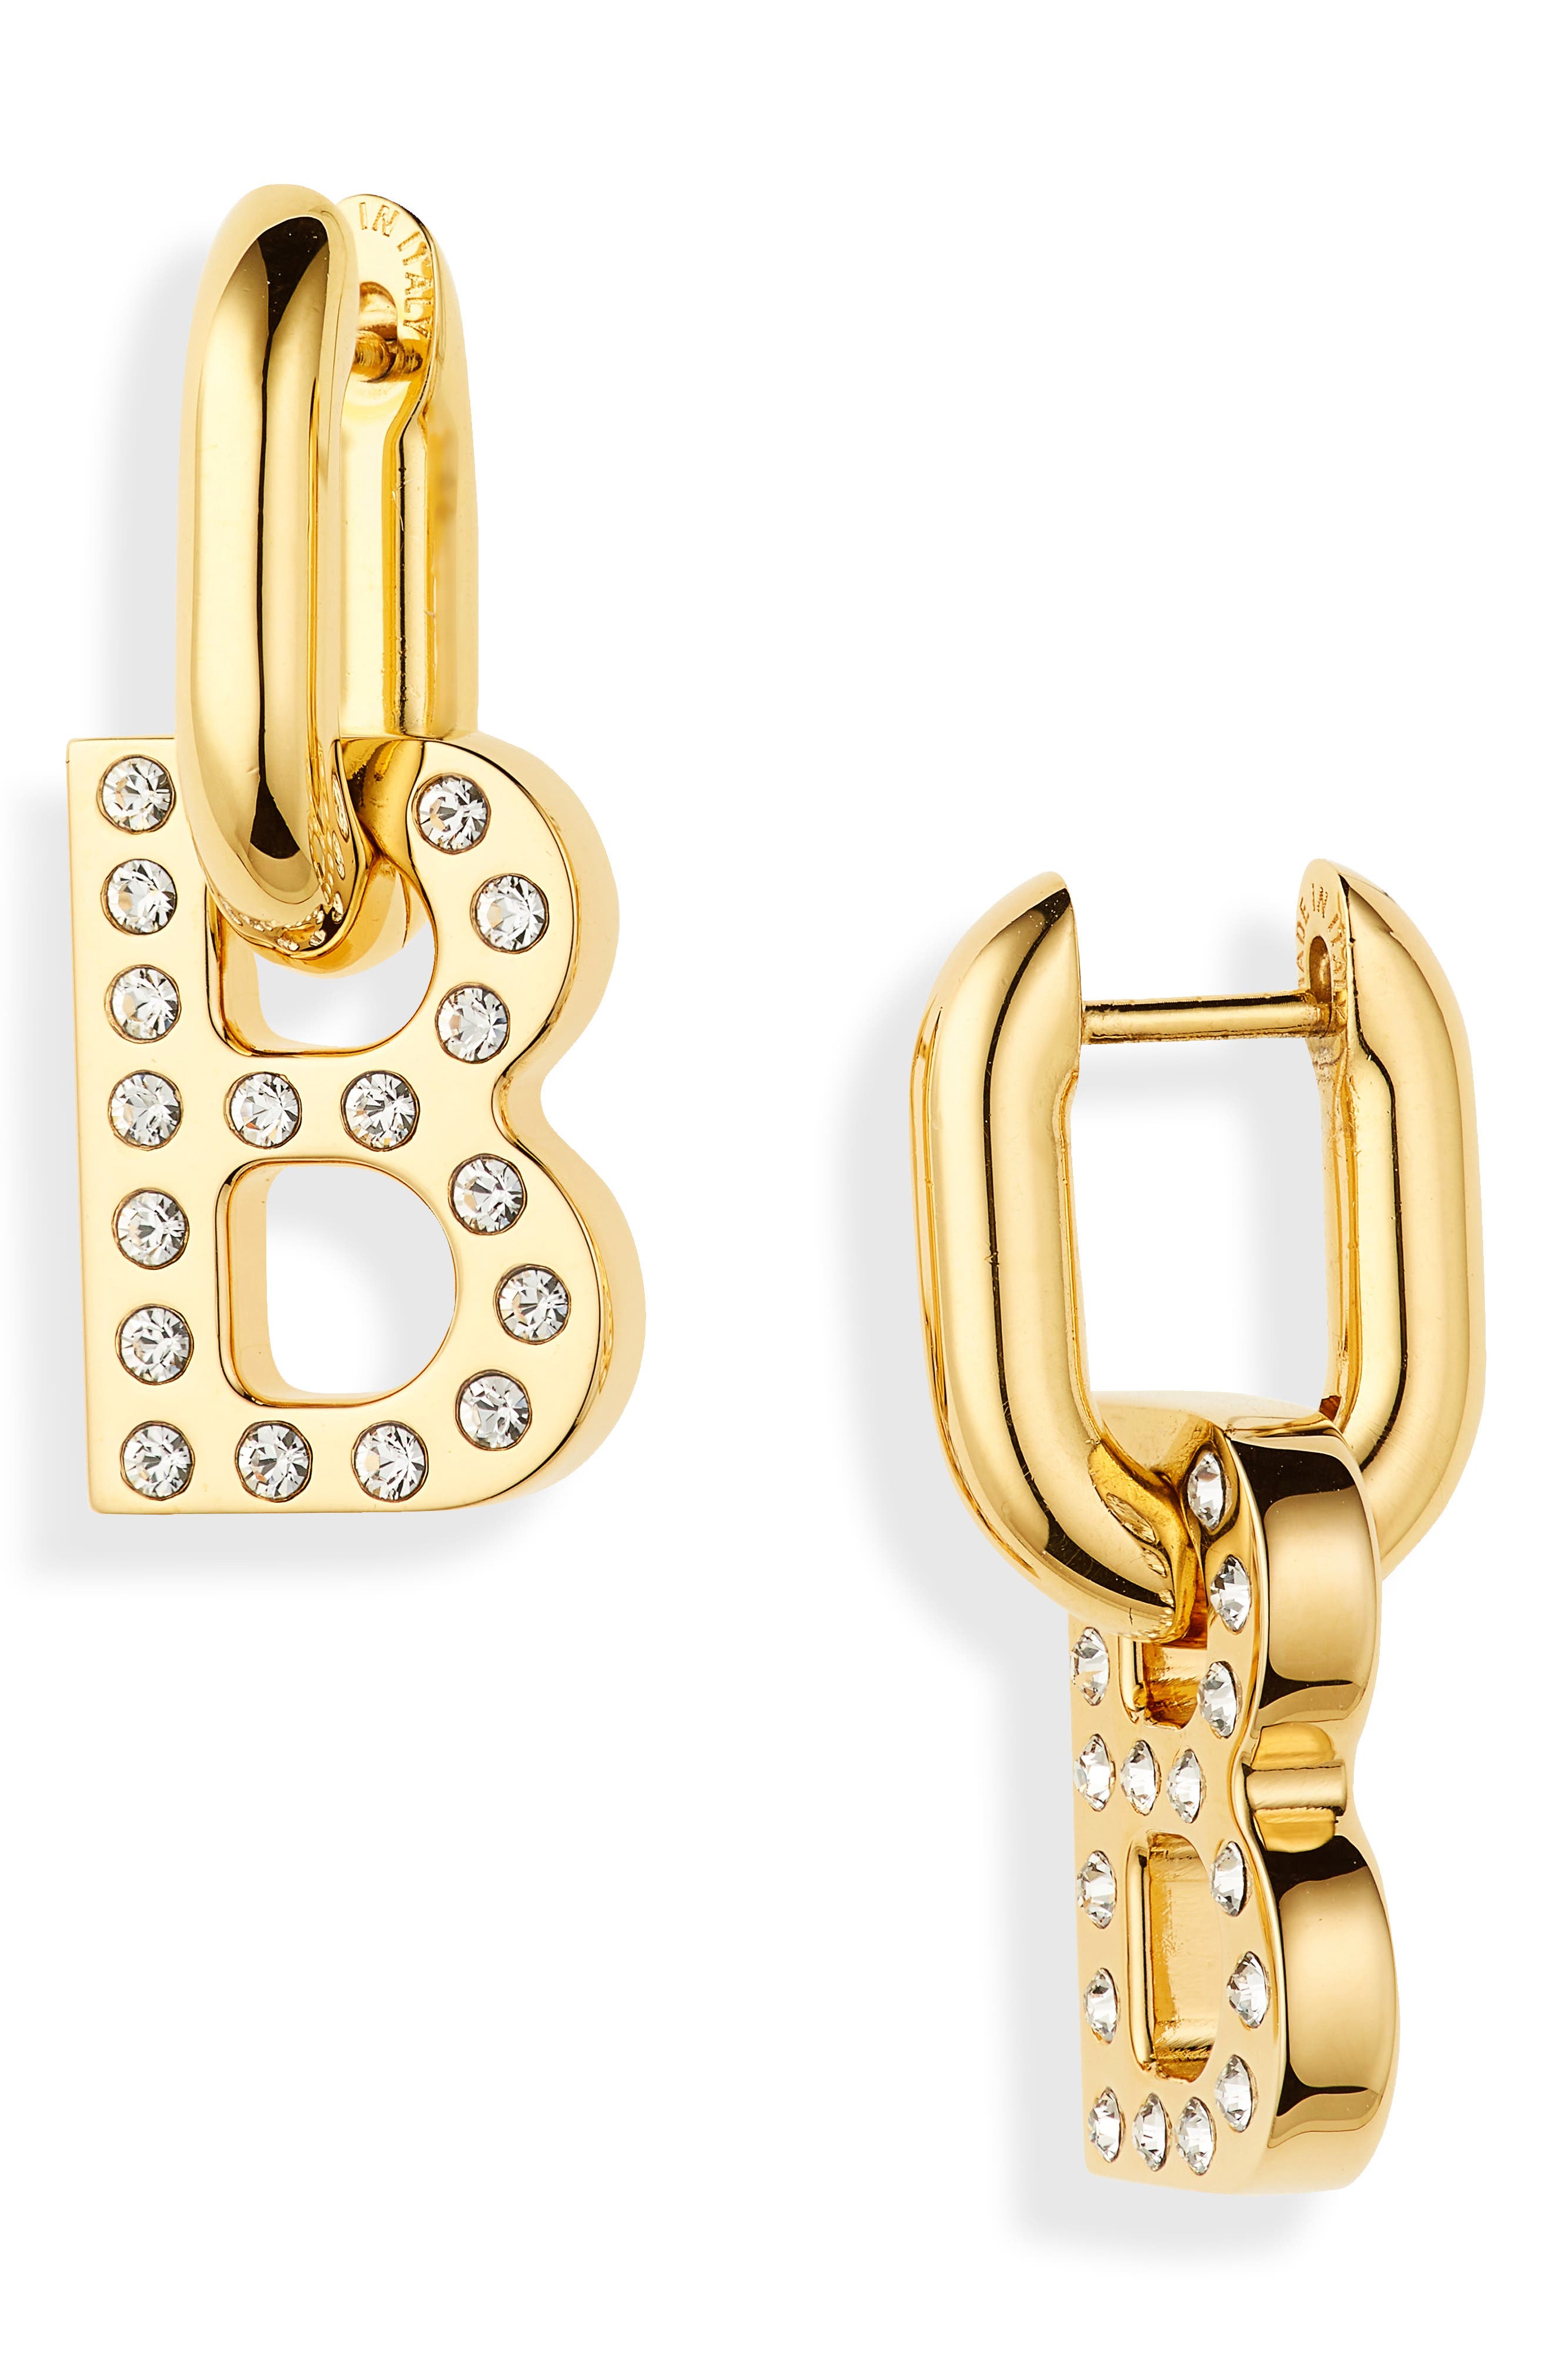 Balenciaga Crystal B Logo Hoop Earrings in Shiny Gold/Crystal at Nordstrom